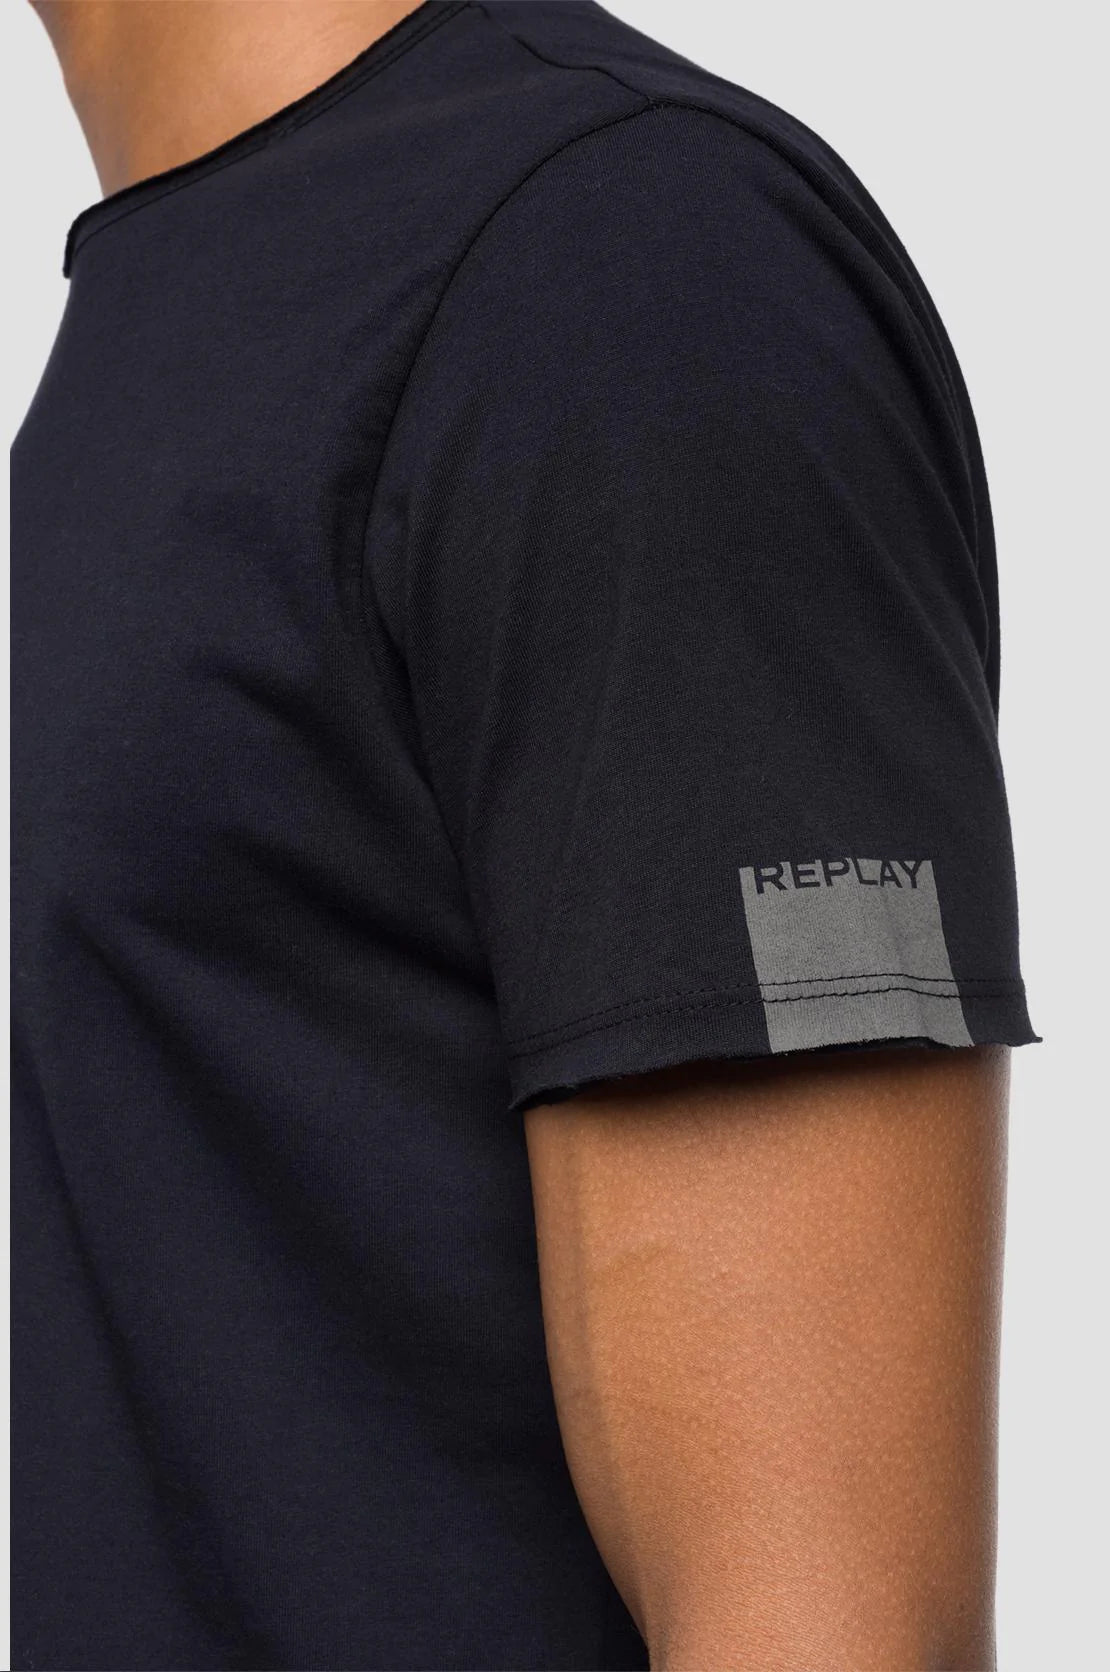 REPLAY T-Shirt schwarz M3590